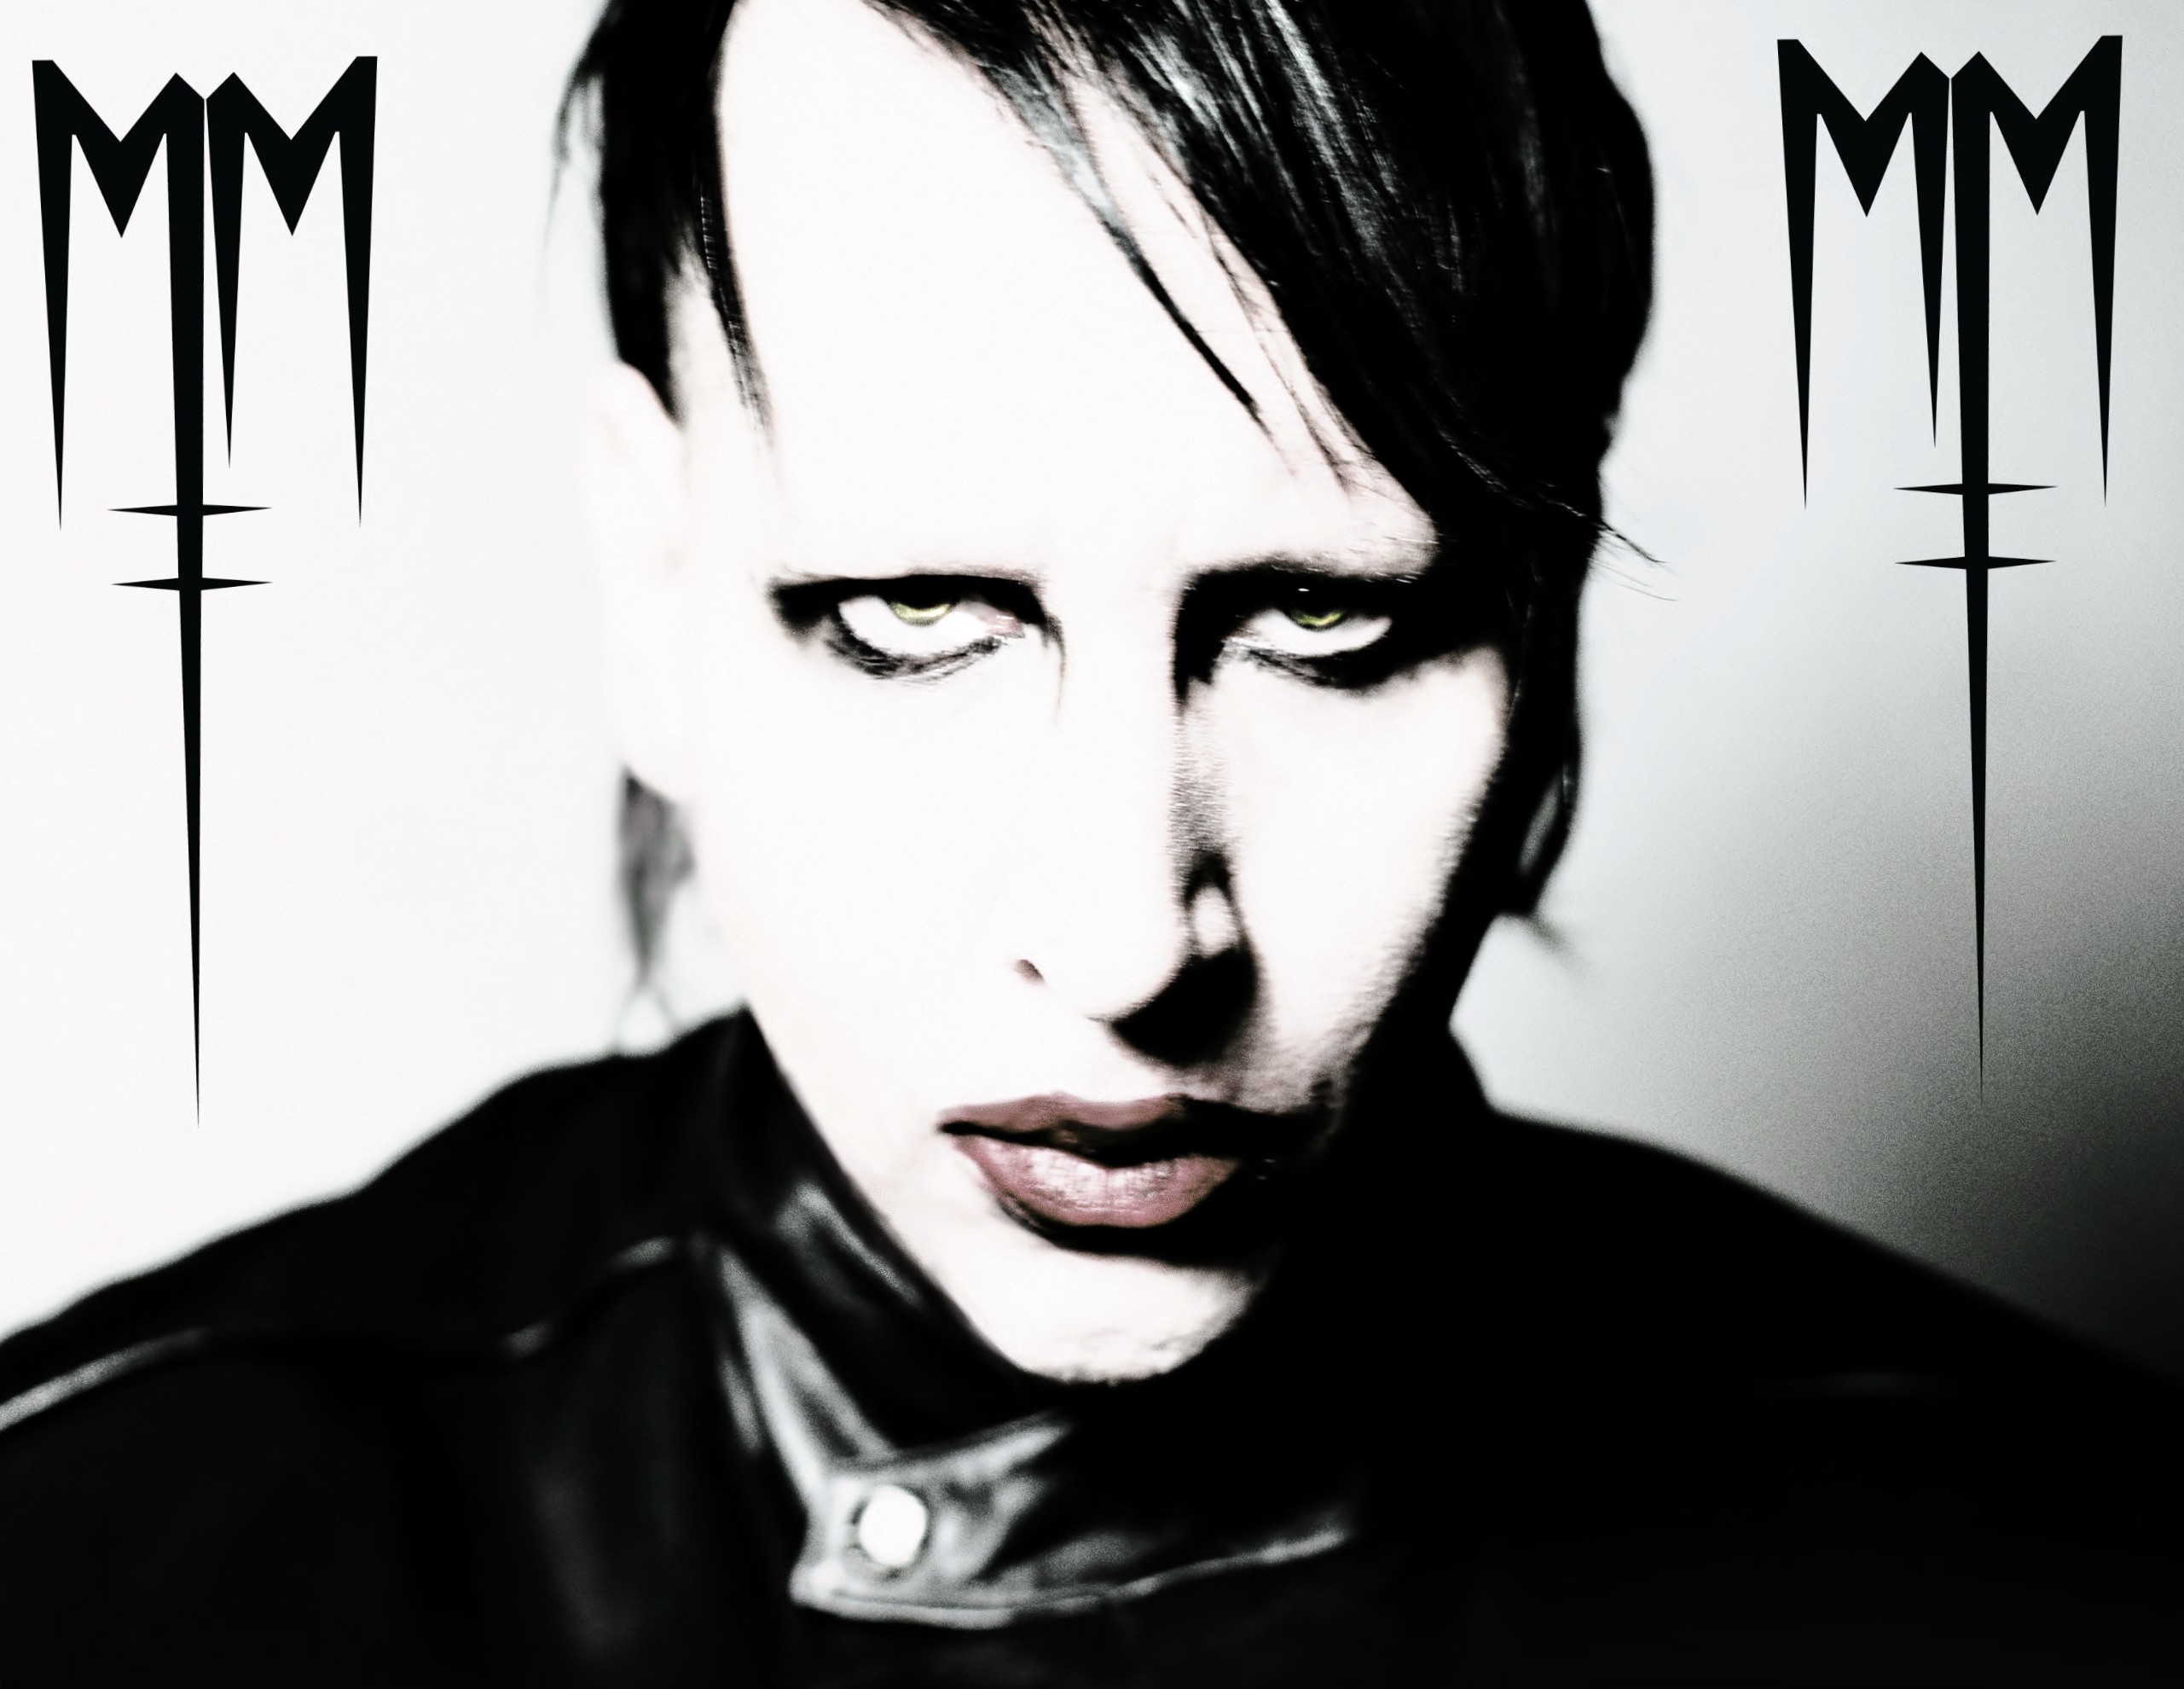 People 2561x1980 Marilyn Manson celebrity men face music singer closeup